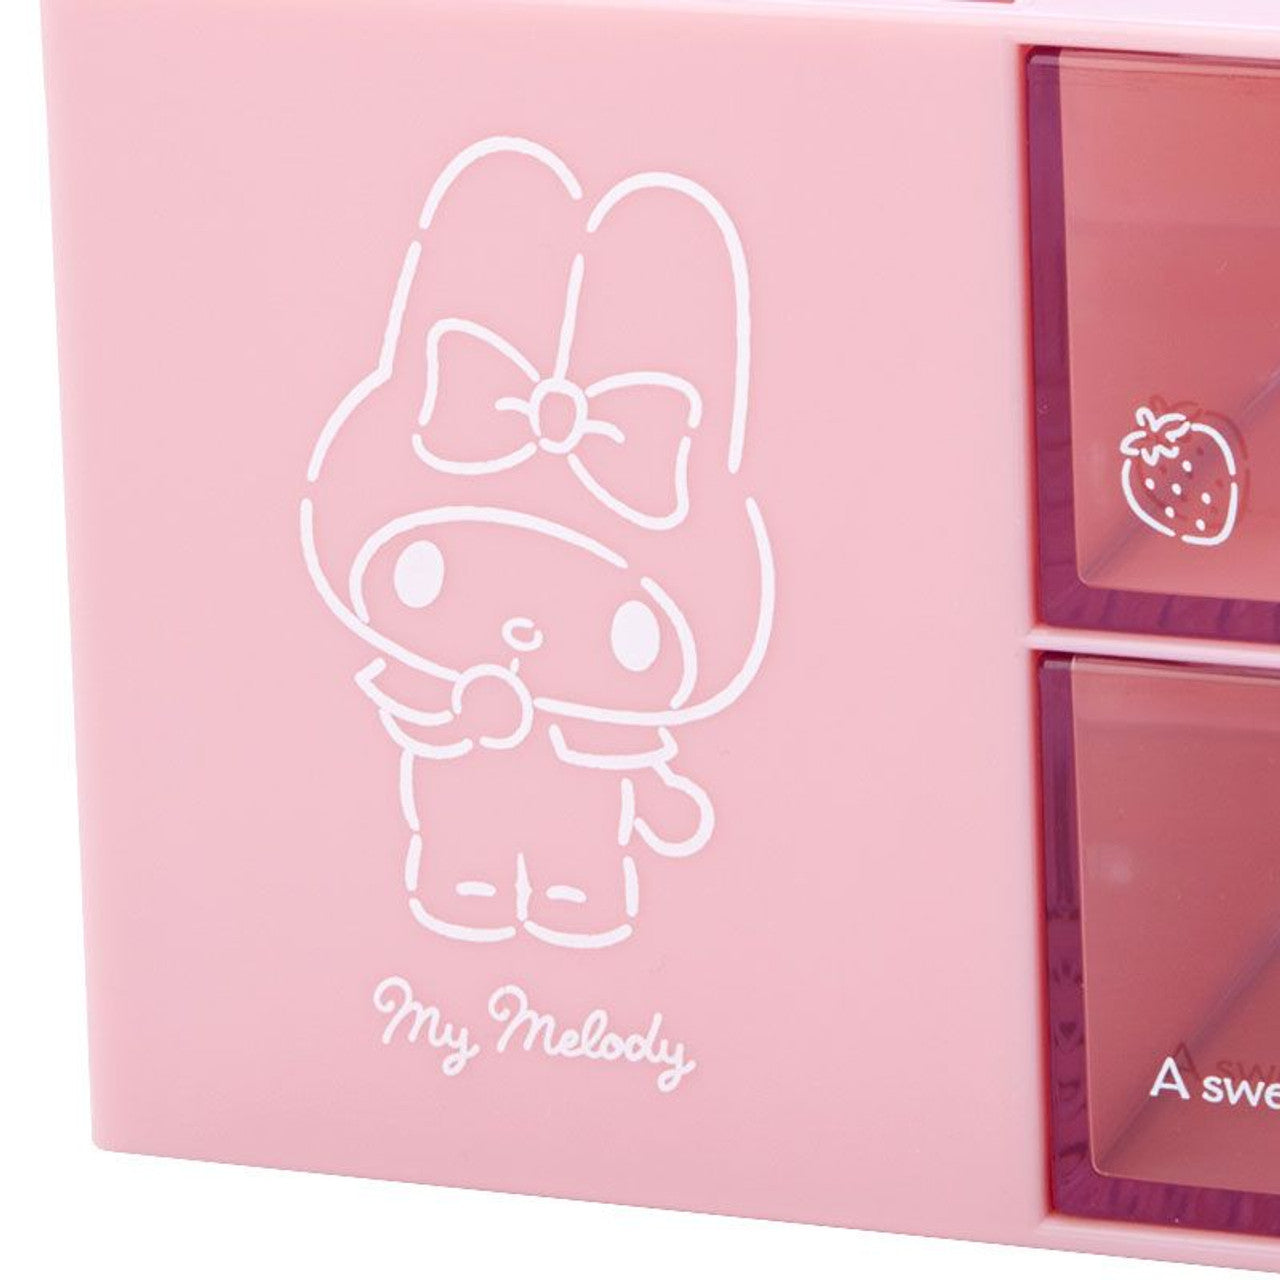 Sanrio Accessory Box with Pen Stand (Calm Color) - My melody (504793)